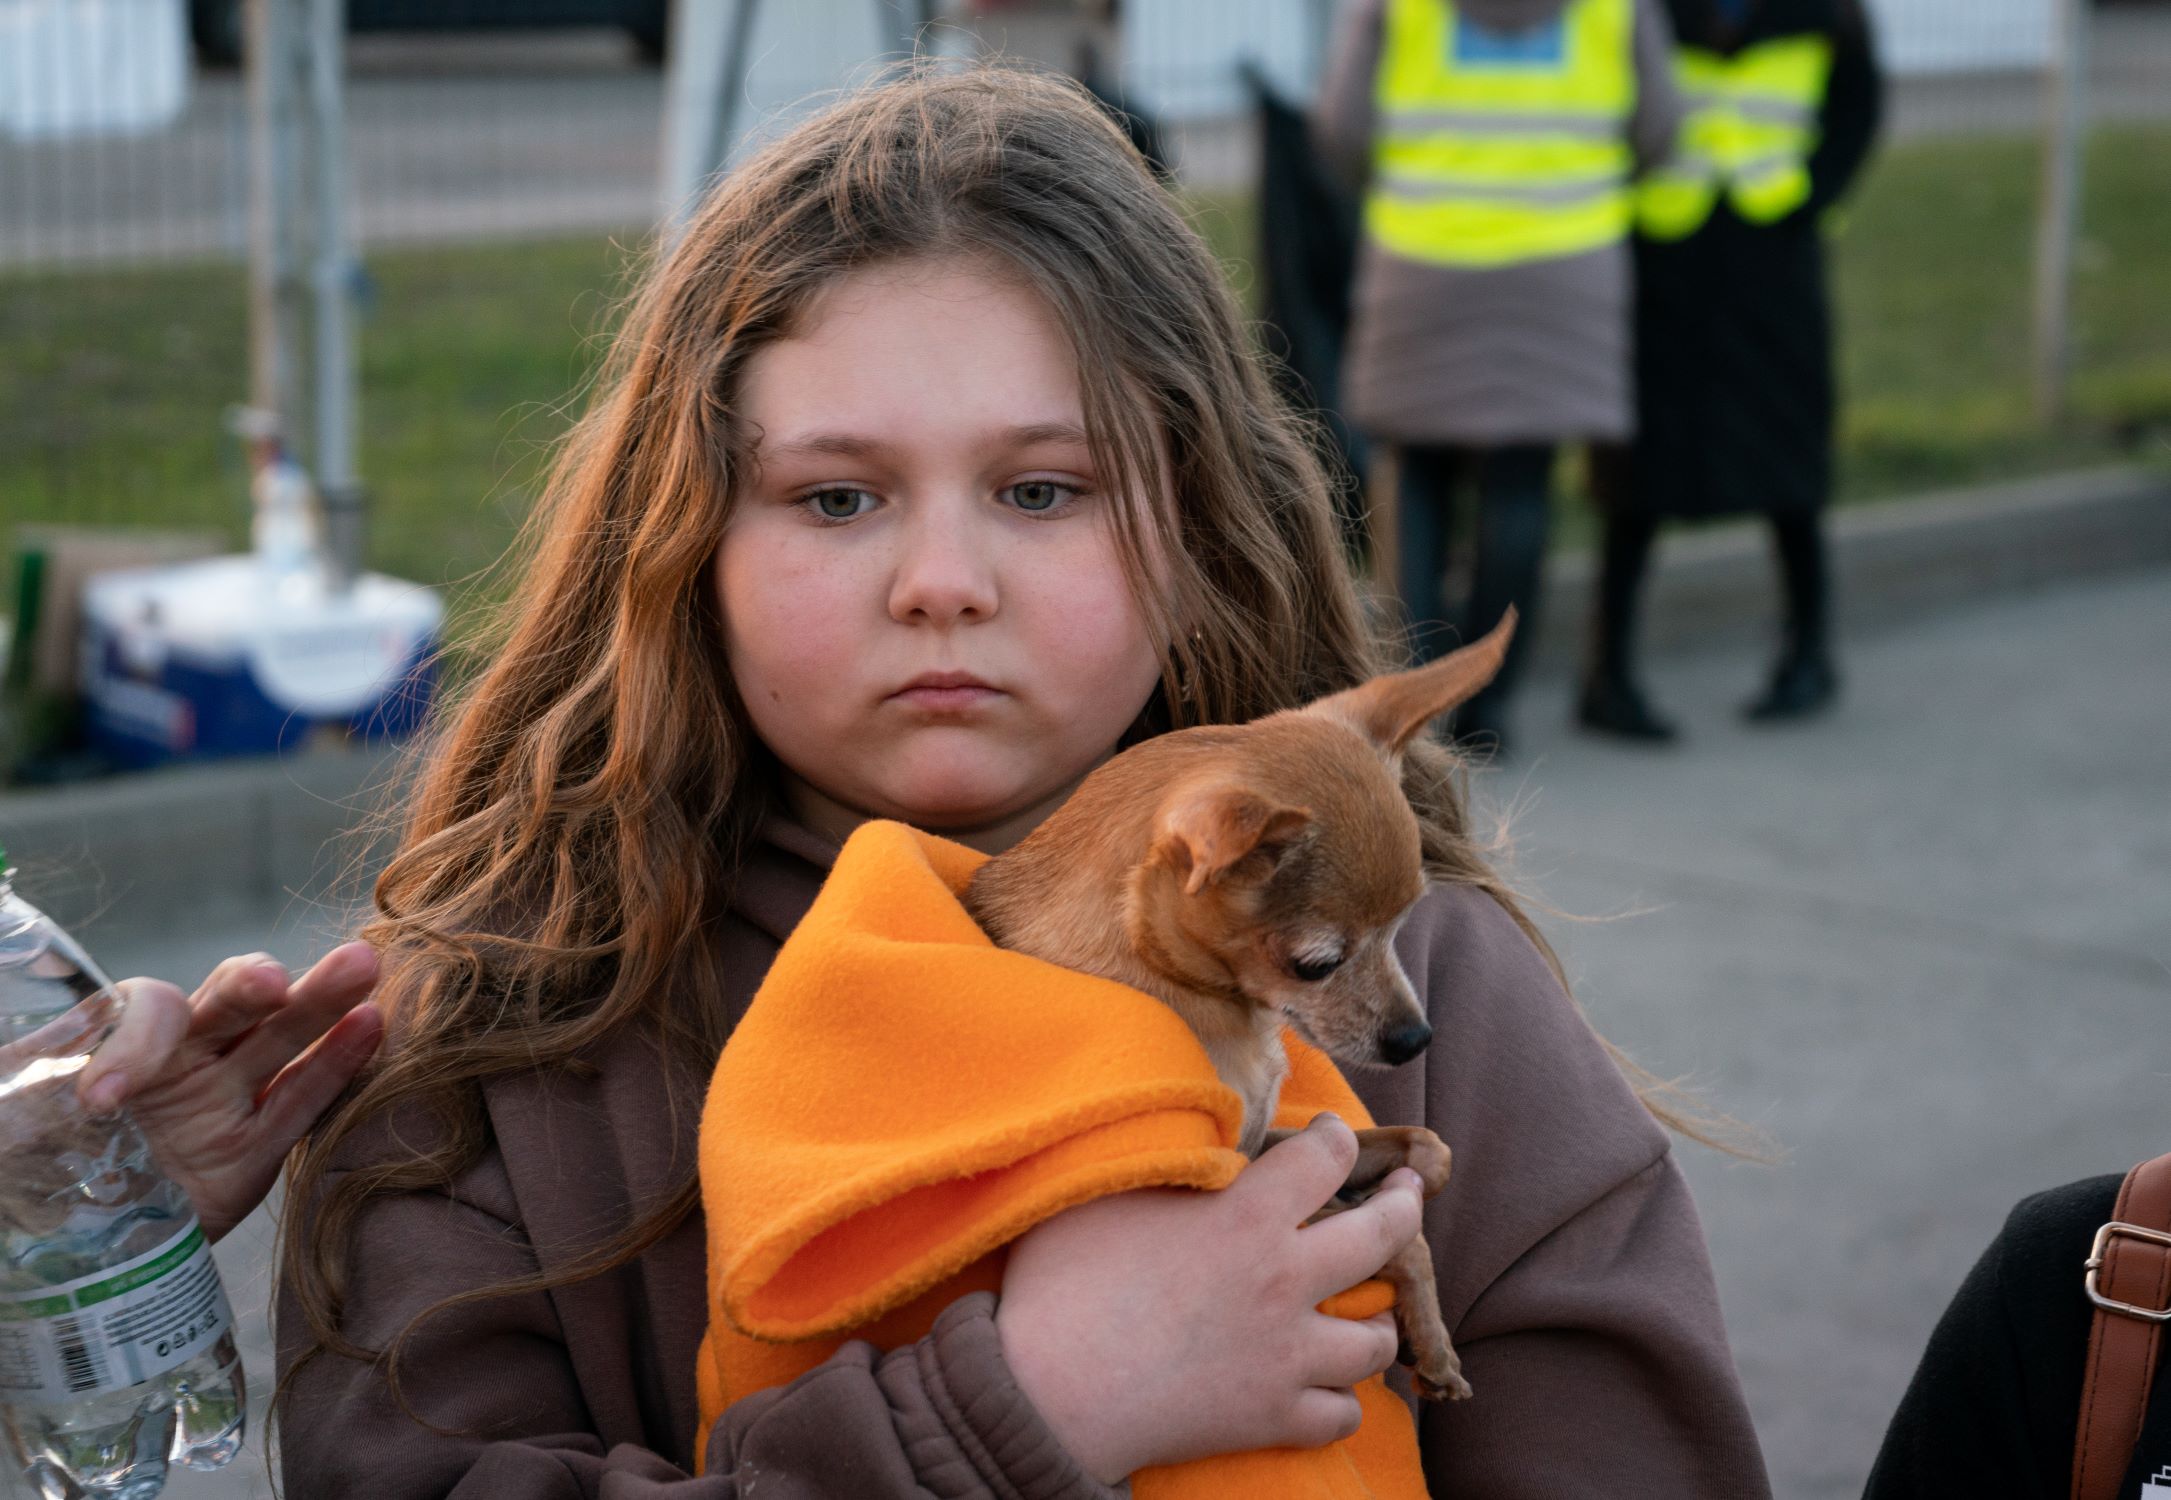 Polina and her dog fled Ukraine